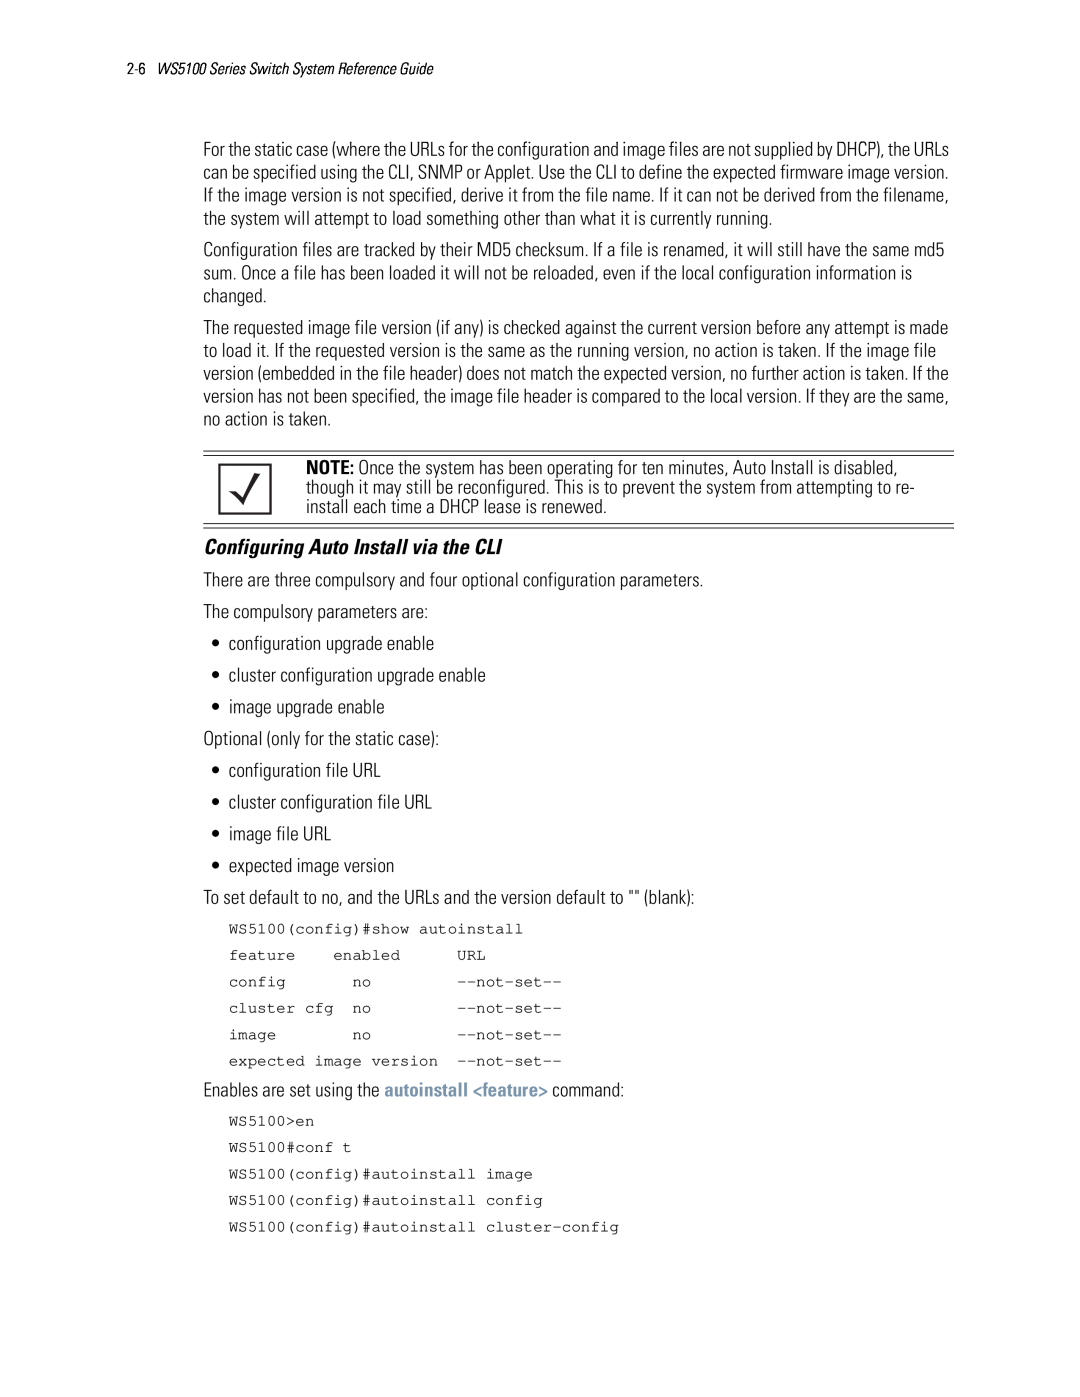 Motorola WS5100 manual Configuring Auto Install via the CLI 